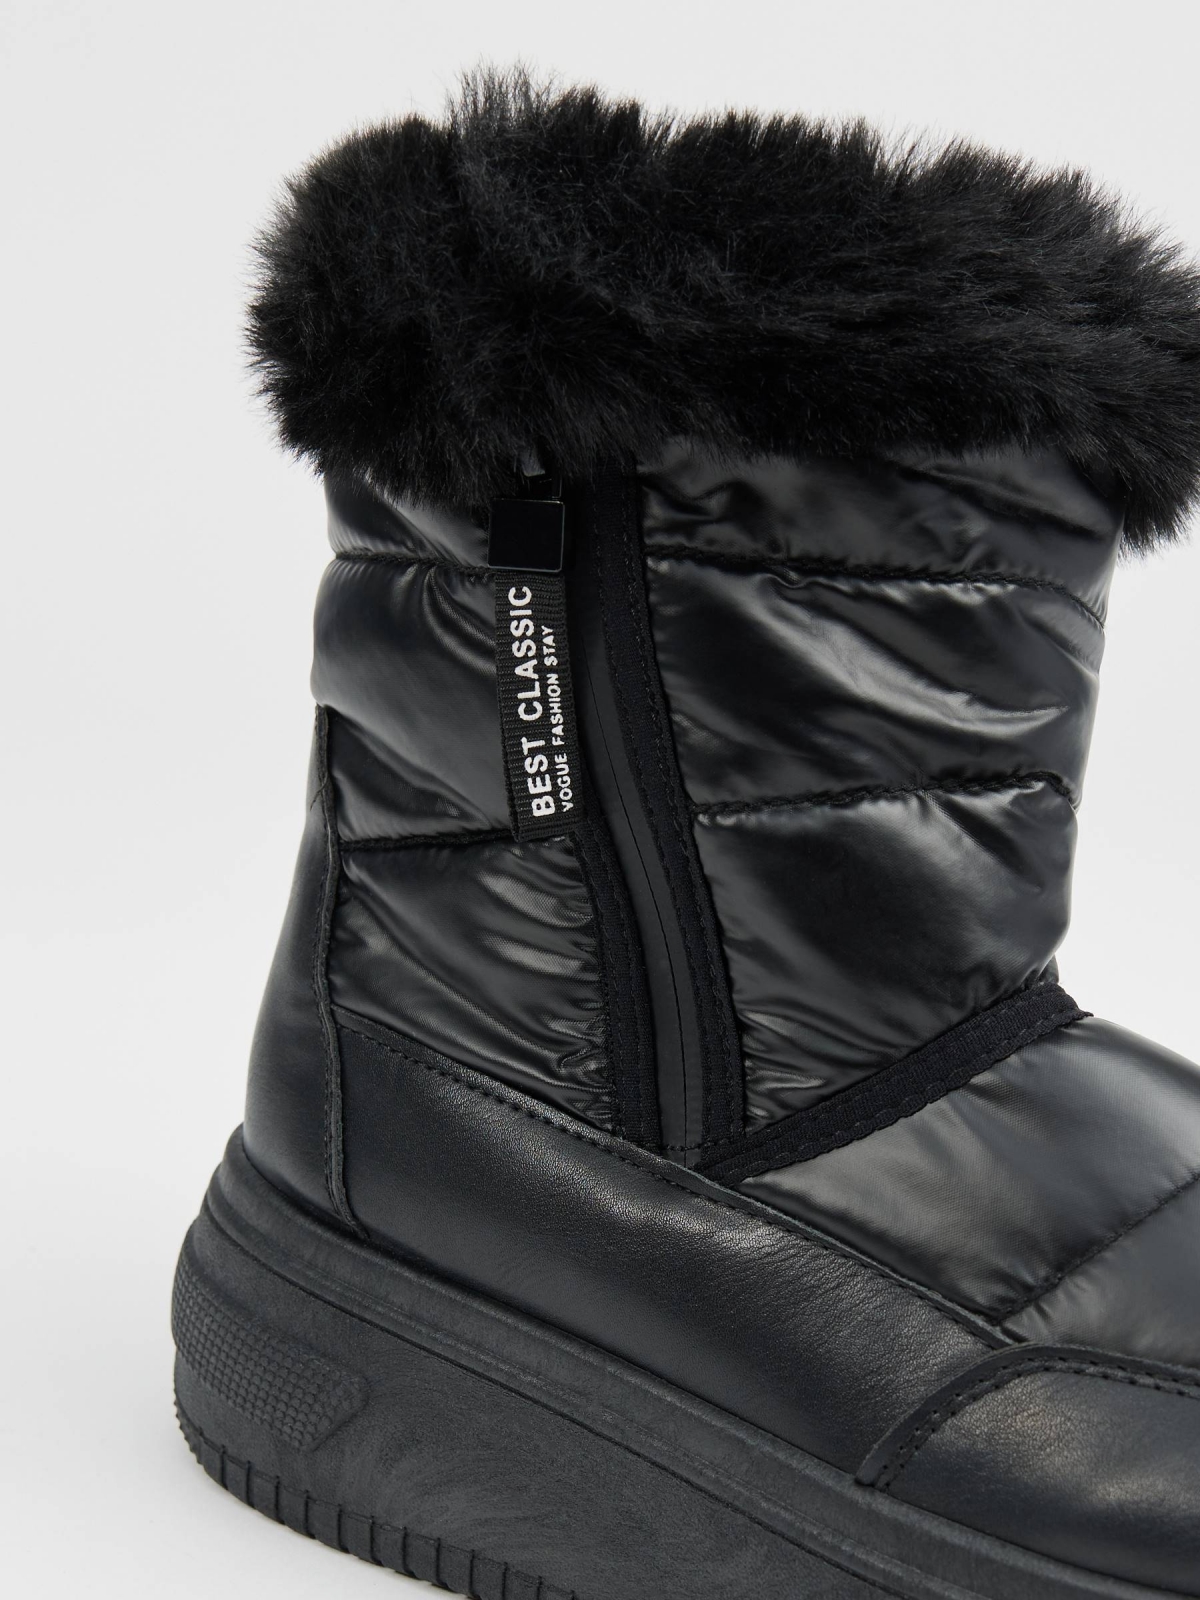 Fashion snow boots detail view